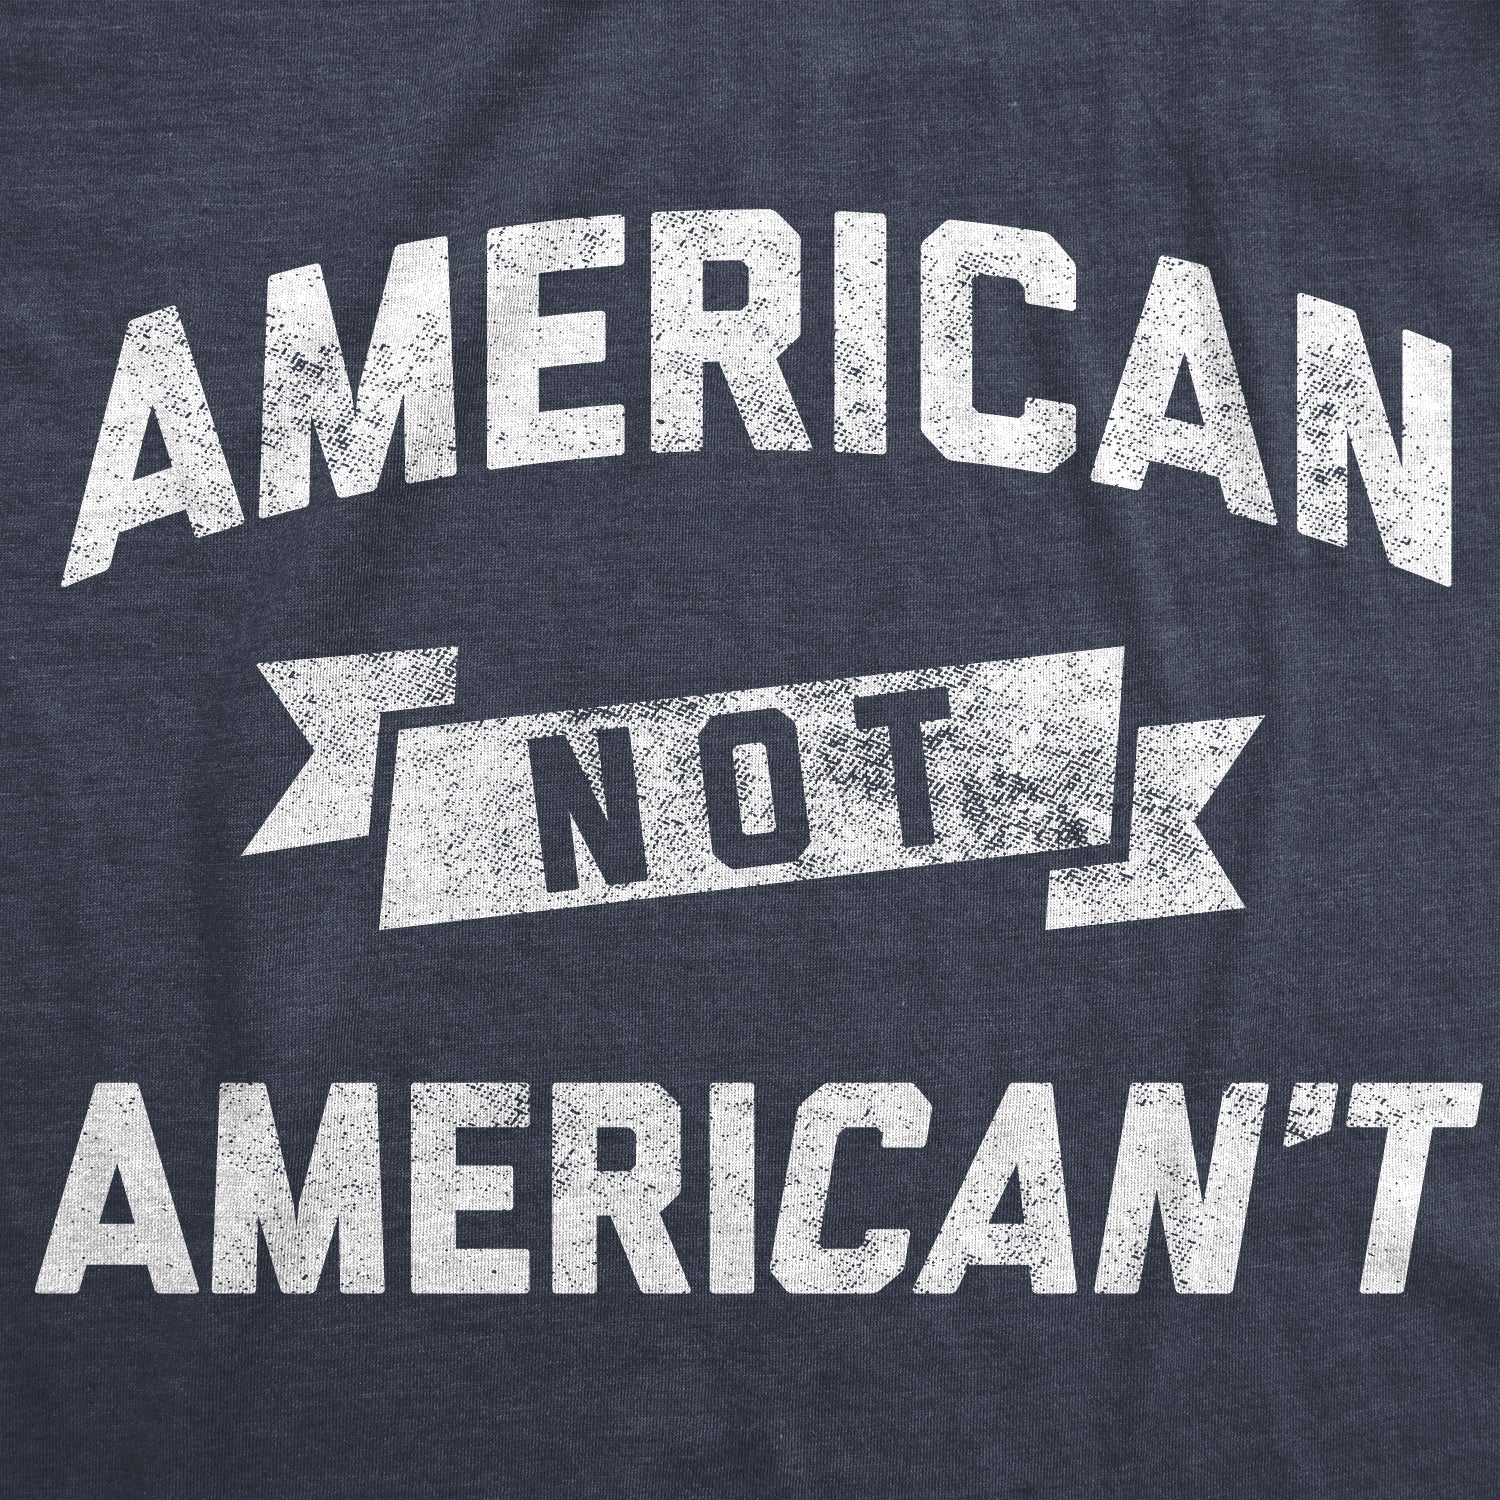 Funny Heather Navy - Americant American Not Americant Mens T Shirt Nerdy Shark Week Political Tee